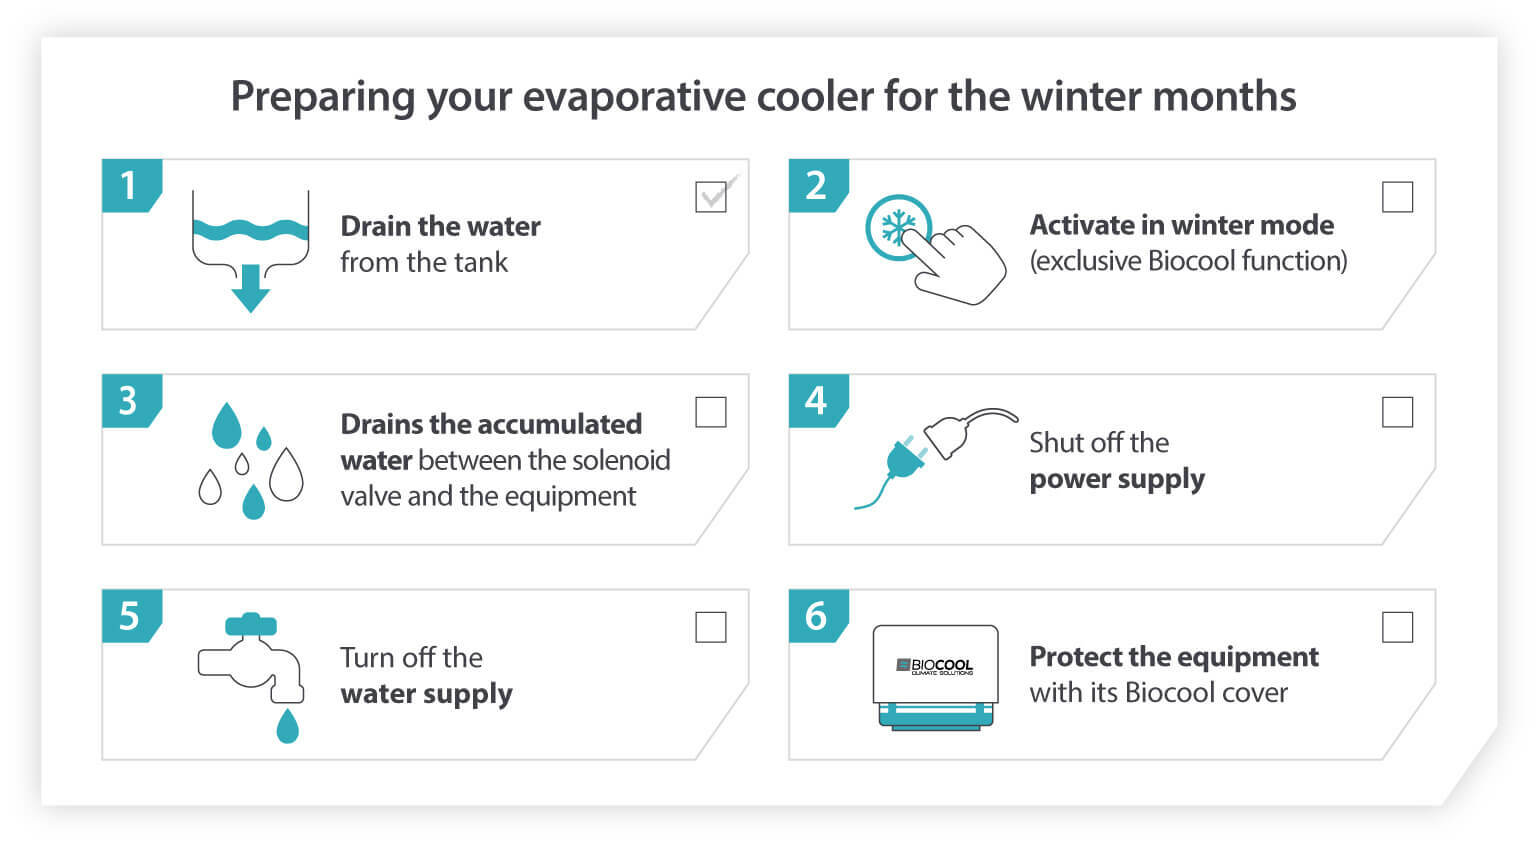 Preparing evaporative cooler for winter months